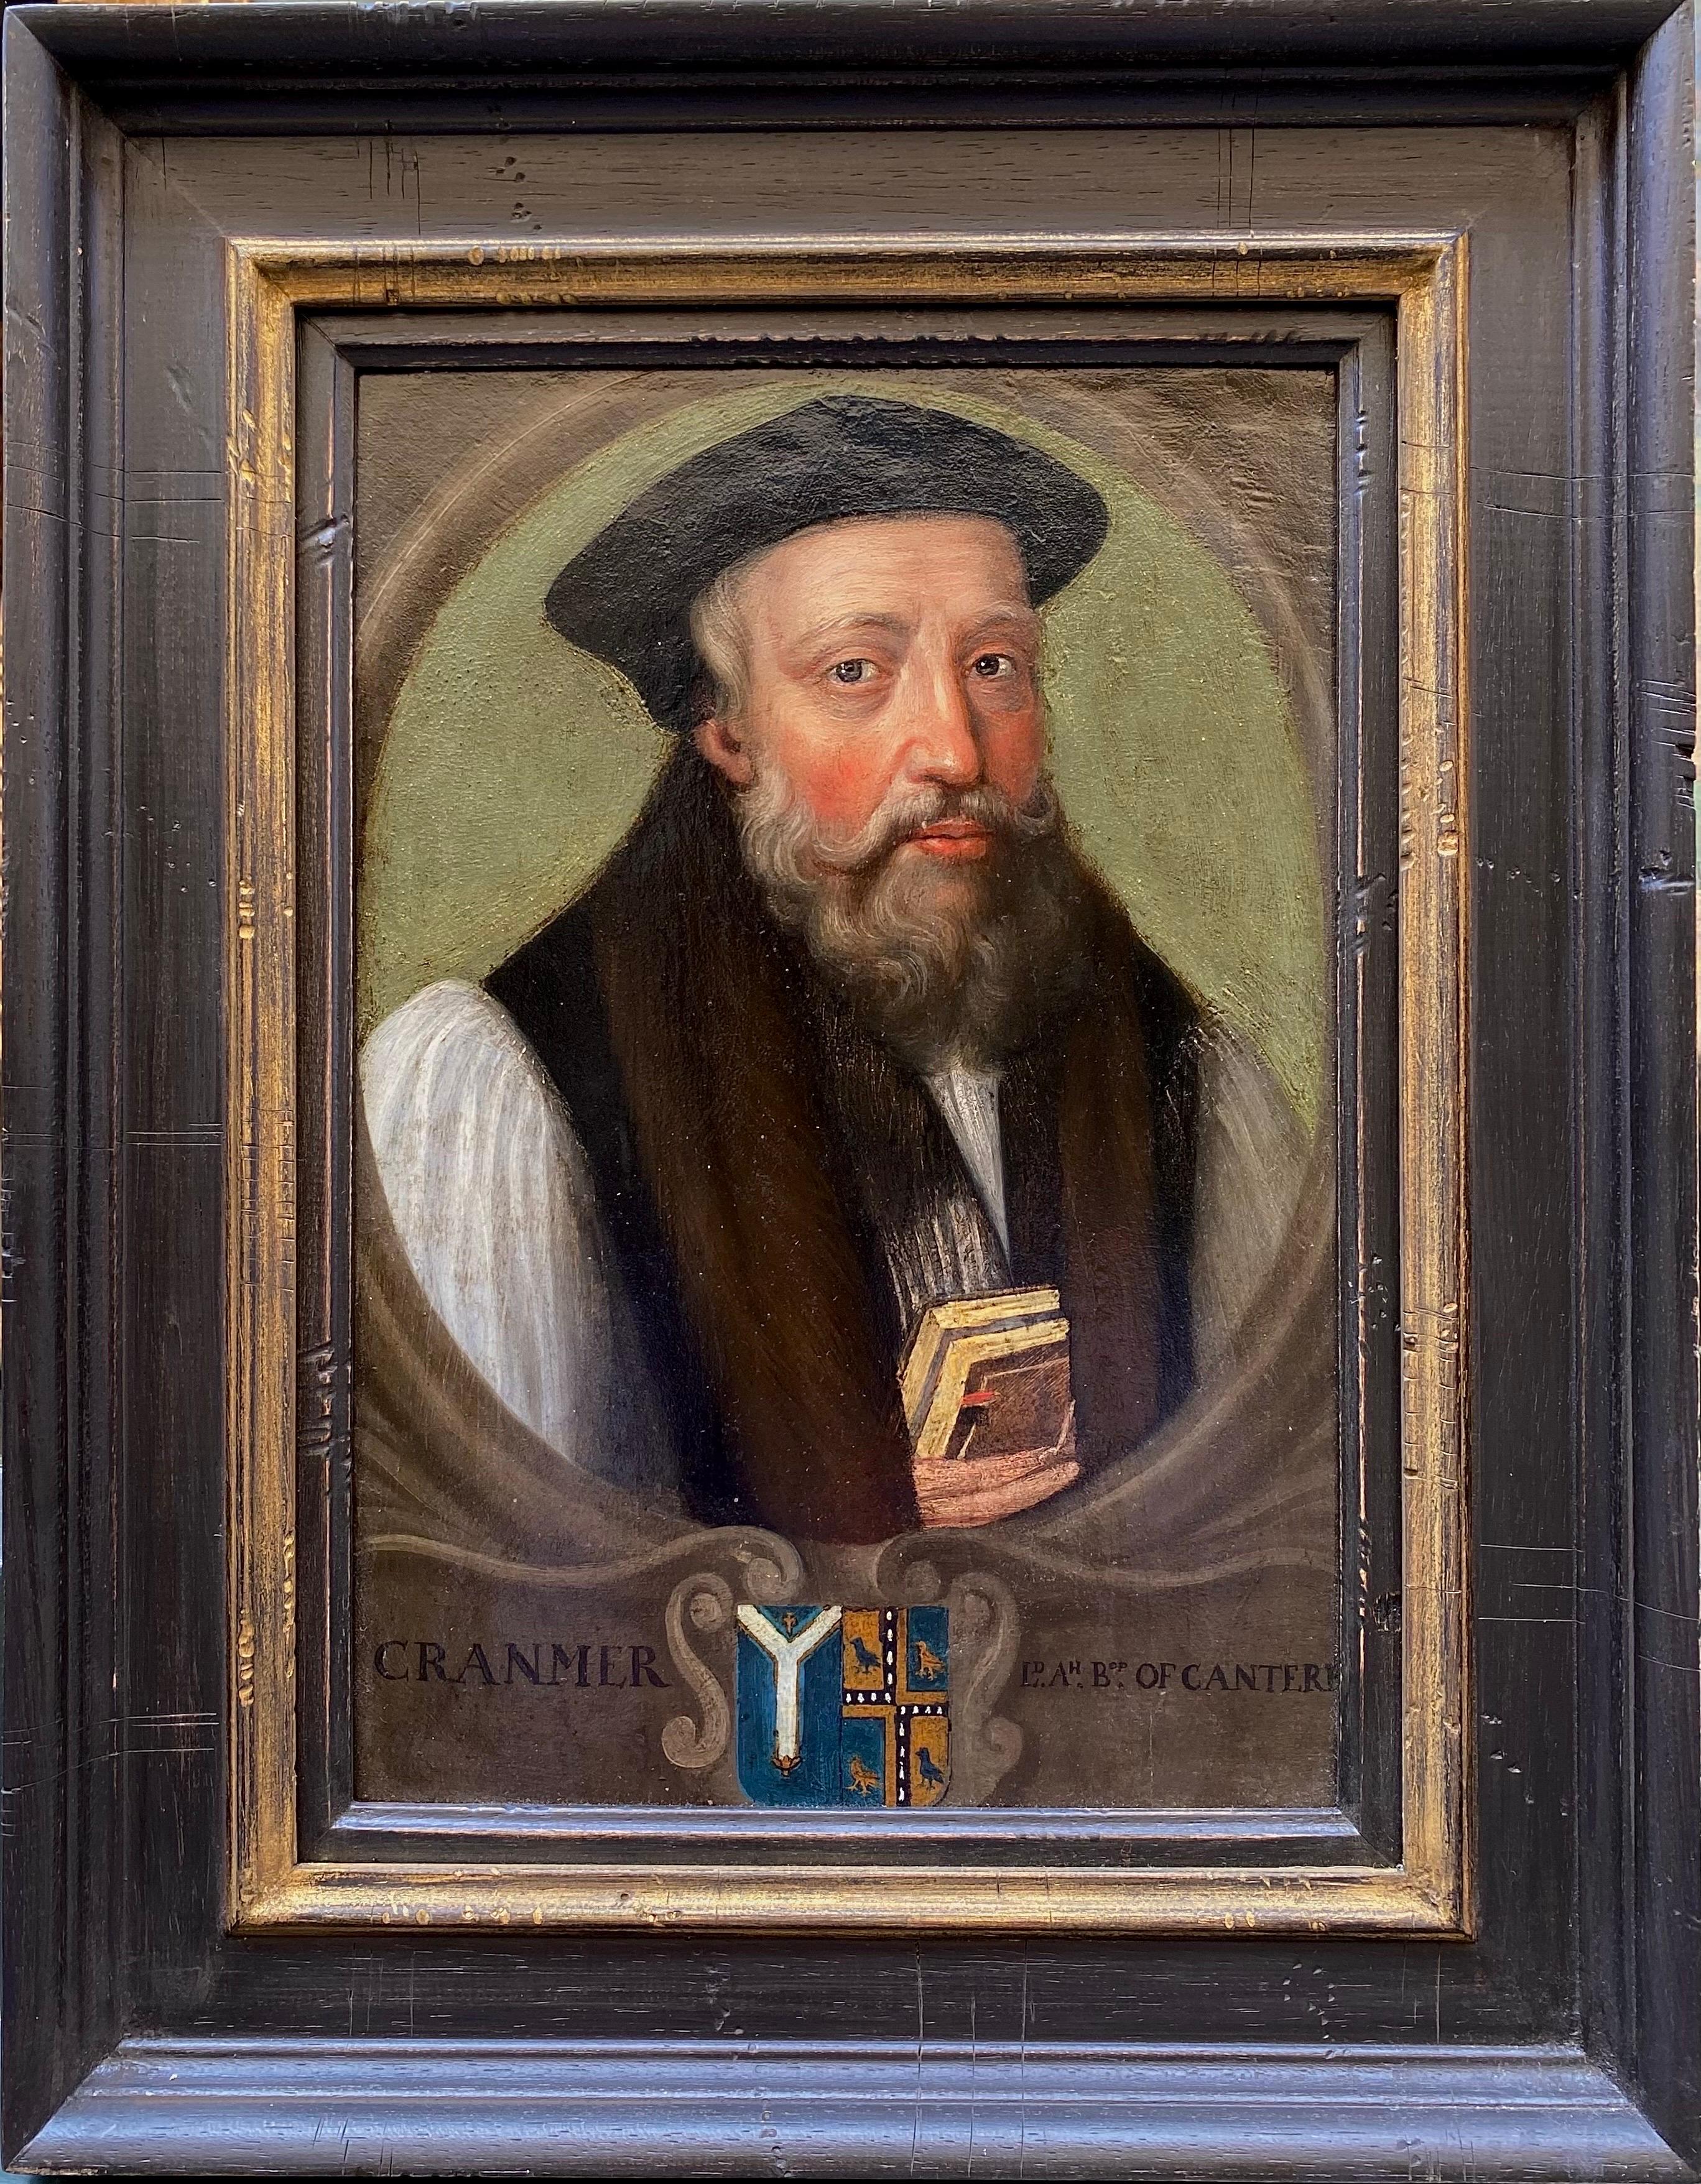 Mid 16th Century English School Portrait Painting - Portrait of Thomas Cranmer, Archbishop of Canterbury, Mid 16th Century Oil